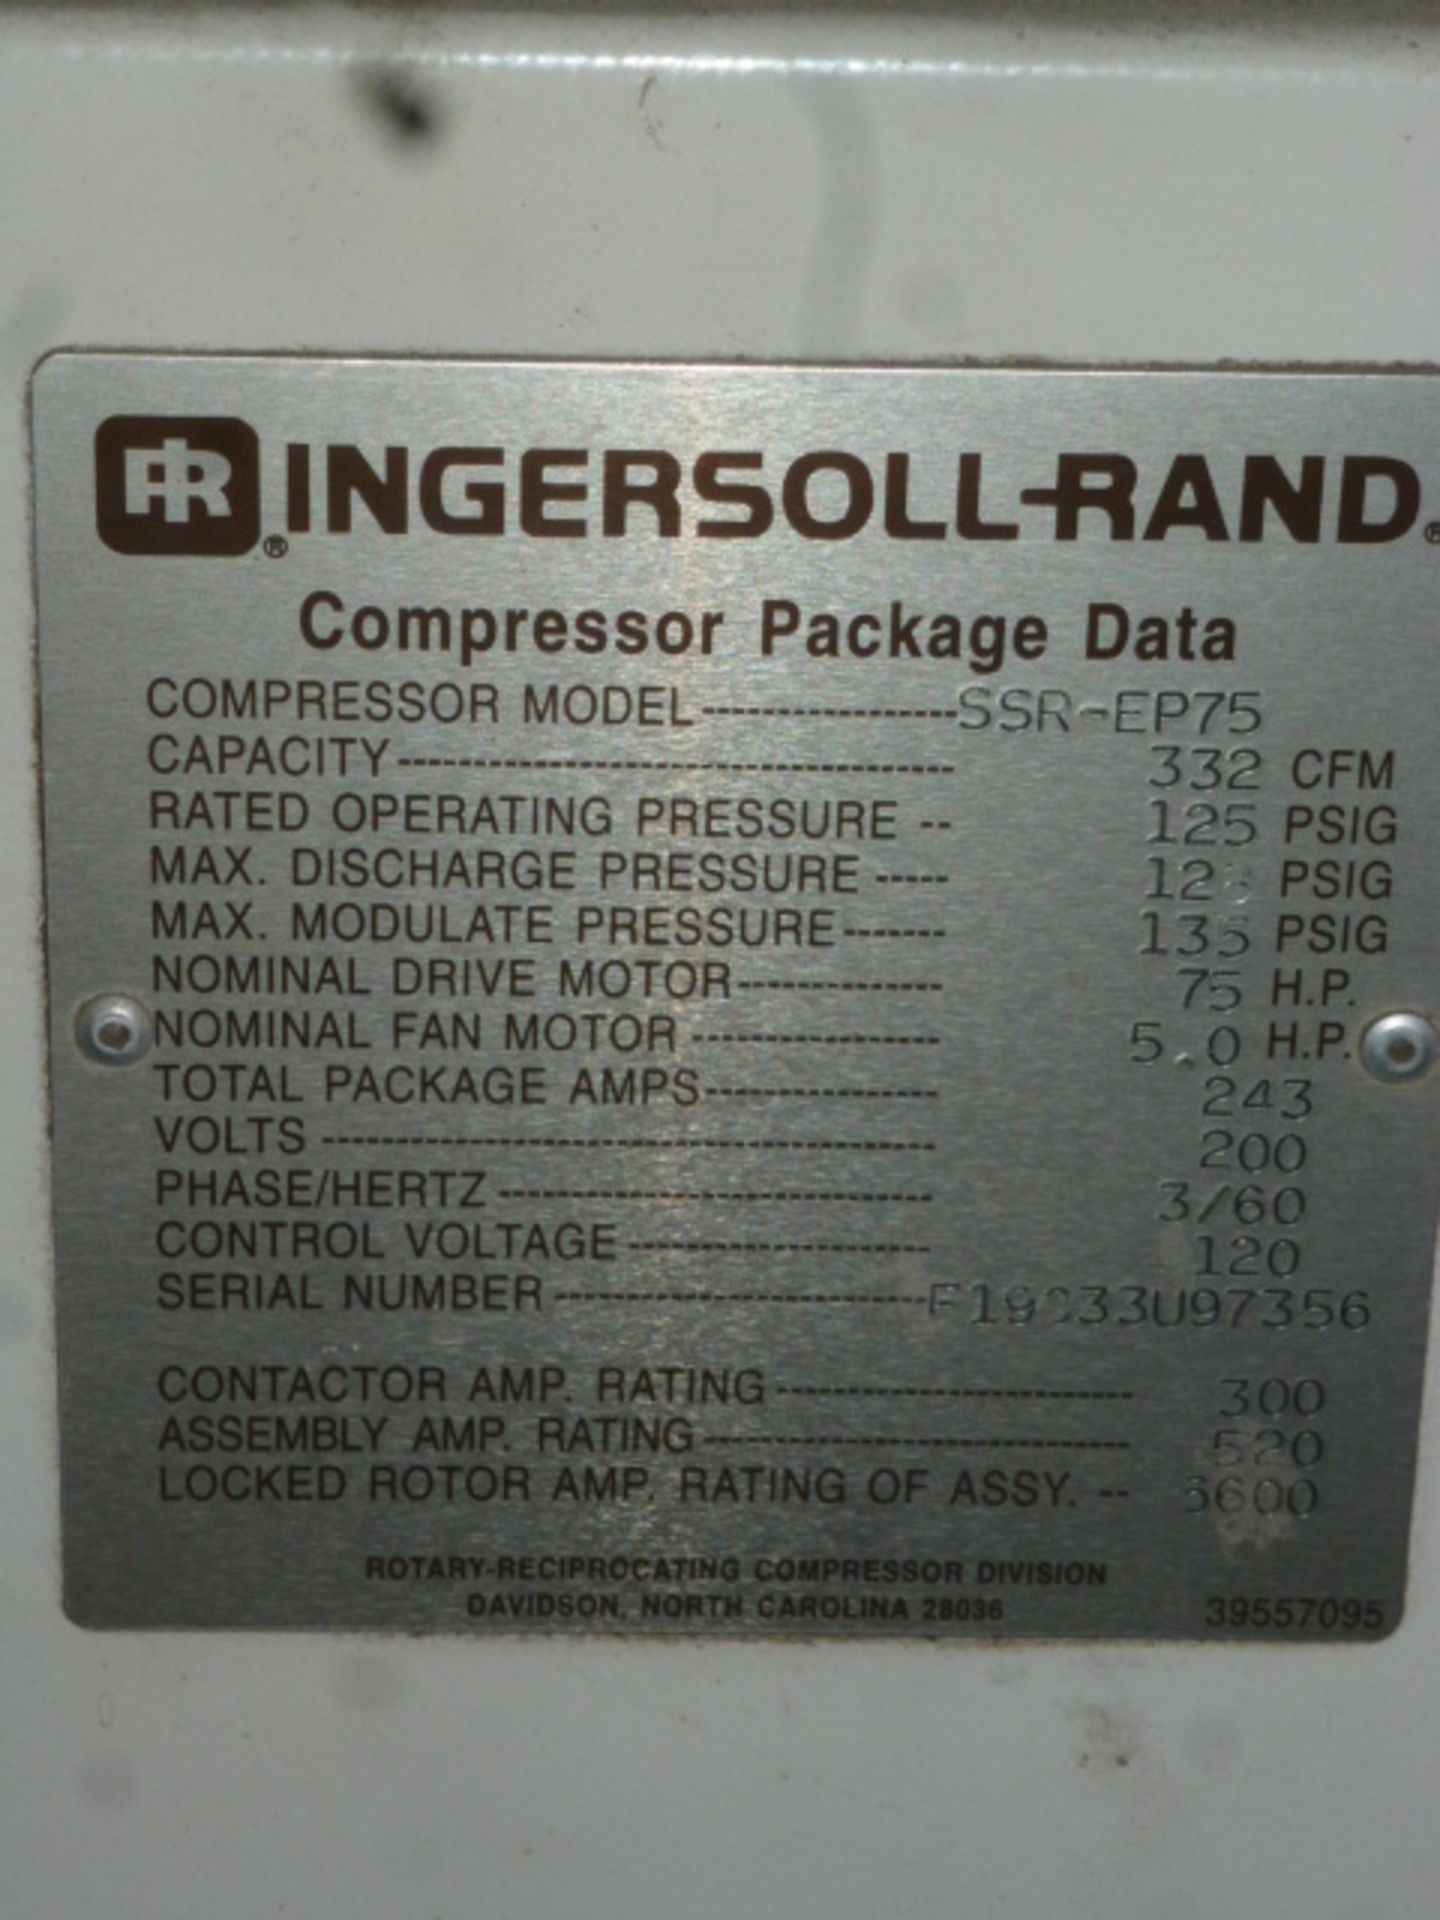 Ingersoll Rand 75-Hp Air Compressor w/Intellisys, m/n SSR-EP 75, s/n F19033U97356 - Image 2 of 2